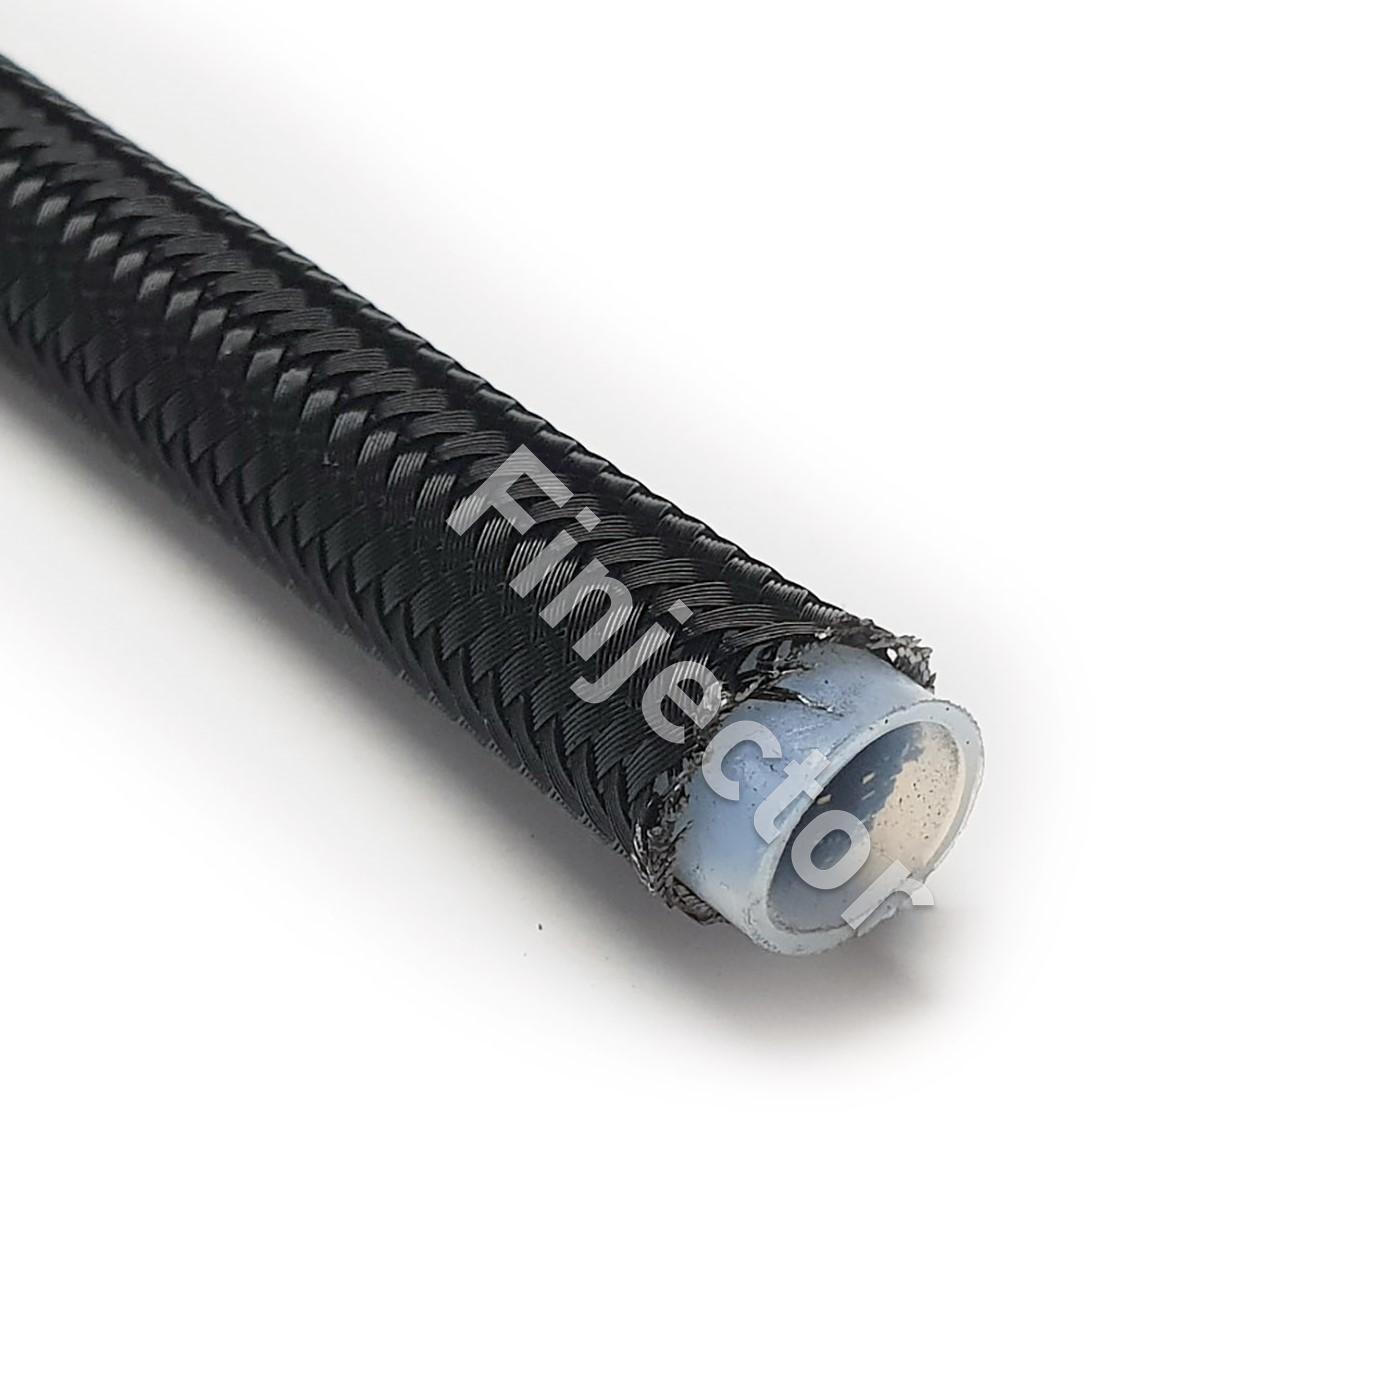 AN PTFE (Teflon) hoses 